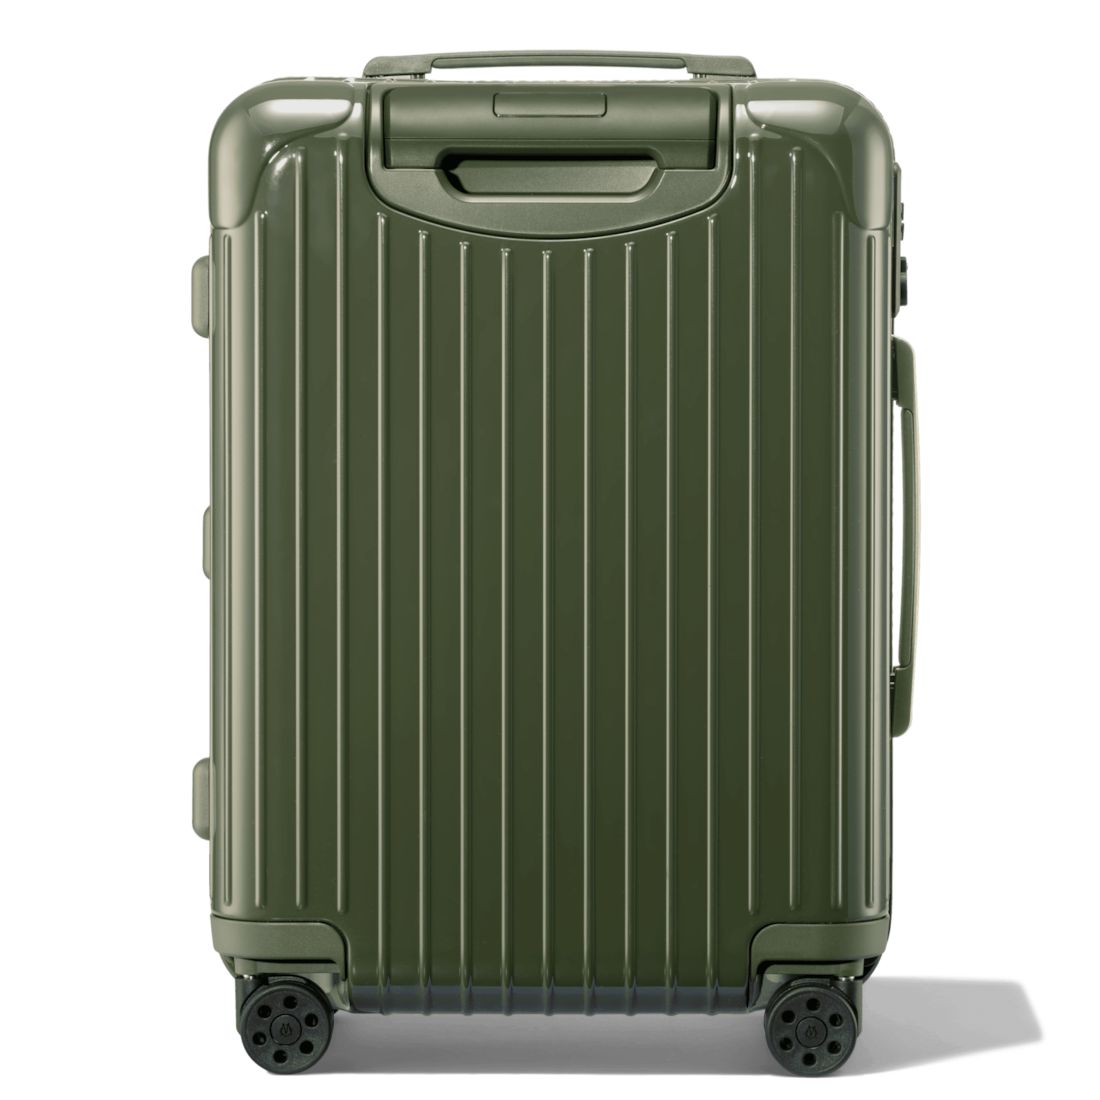 rimowa check in luggage size